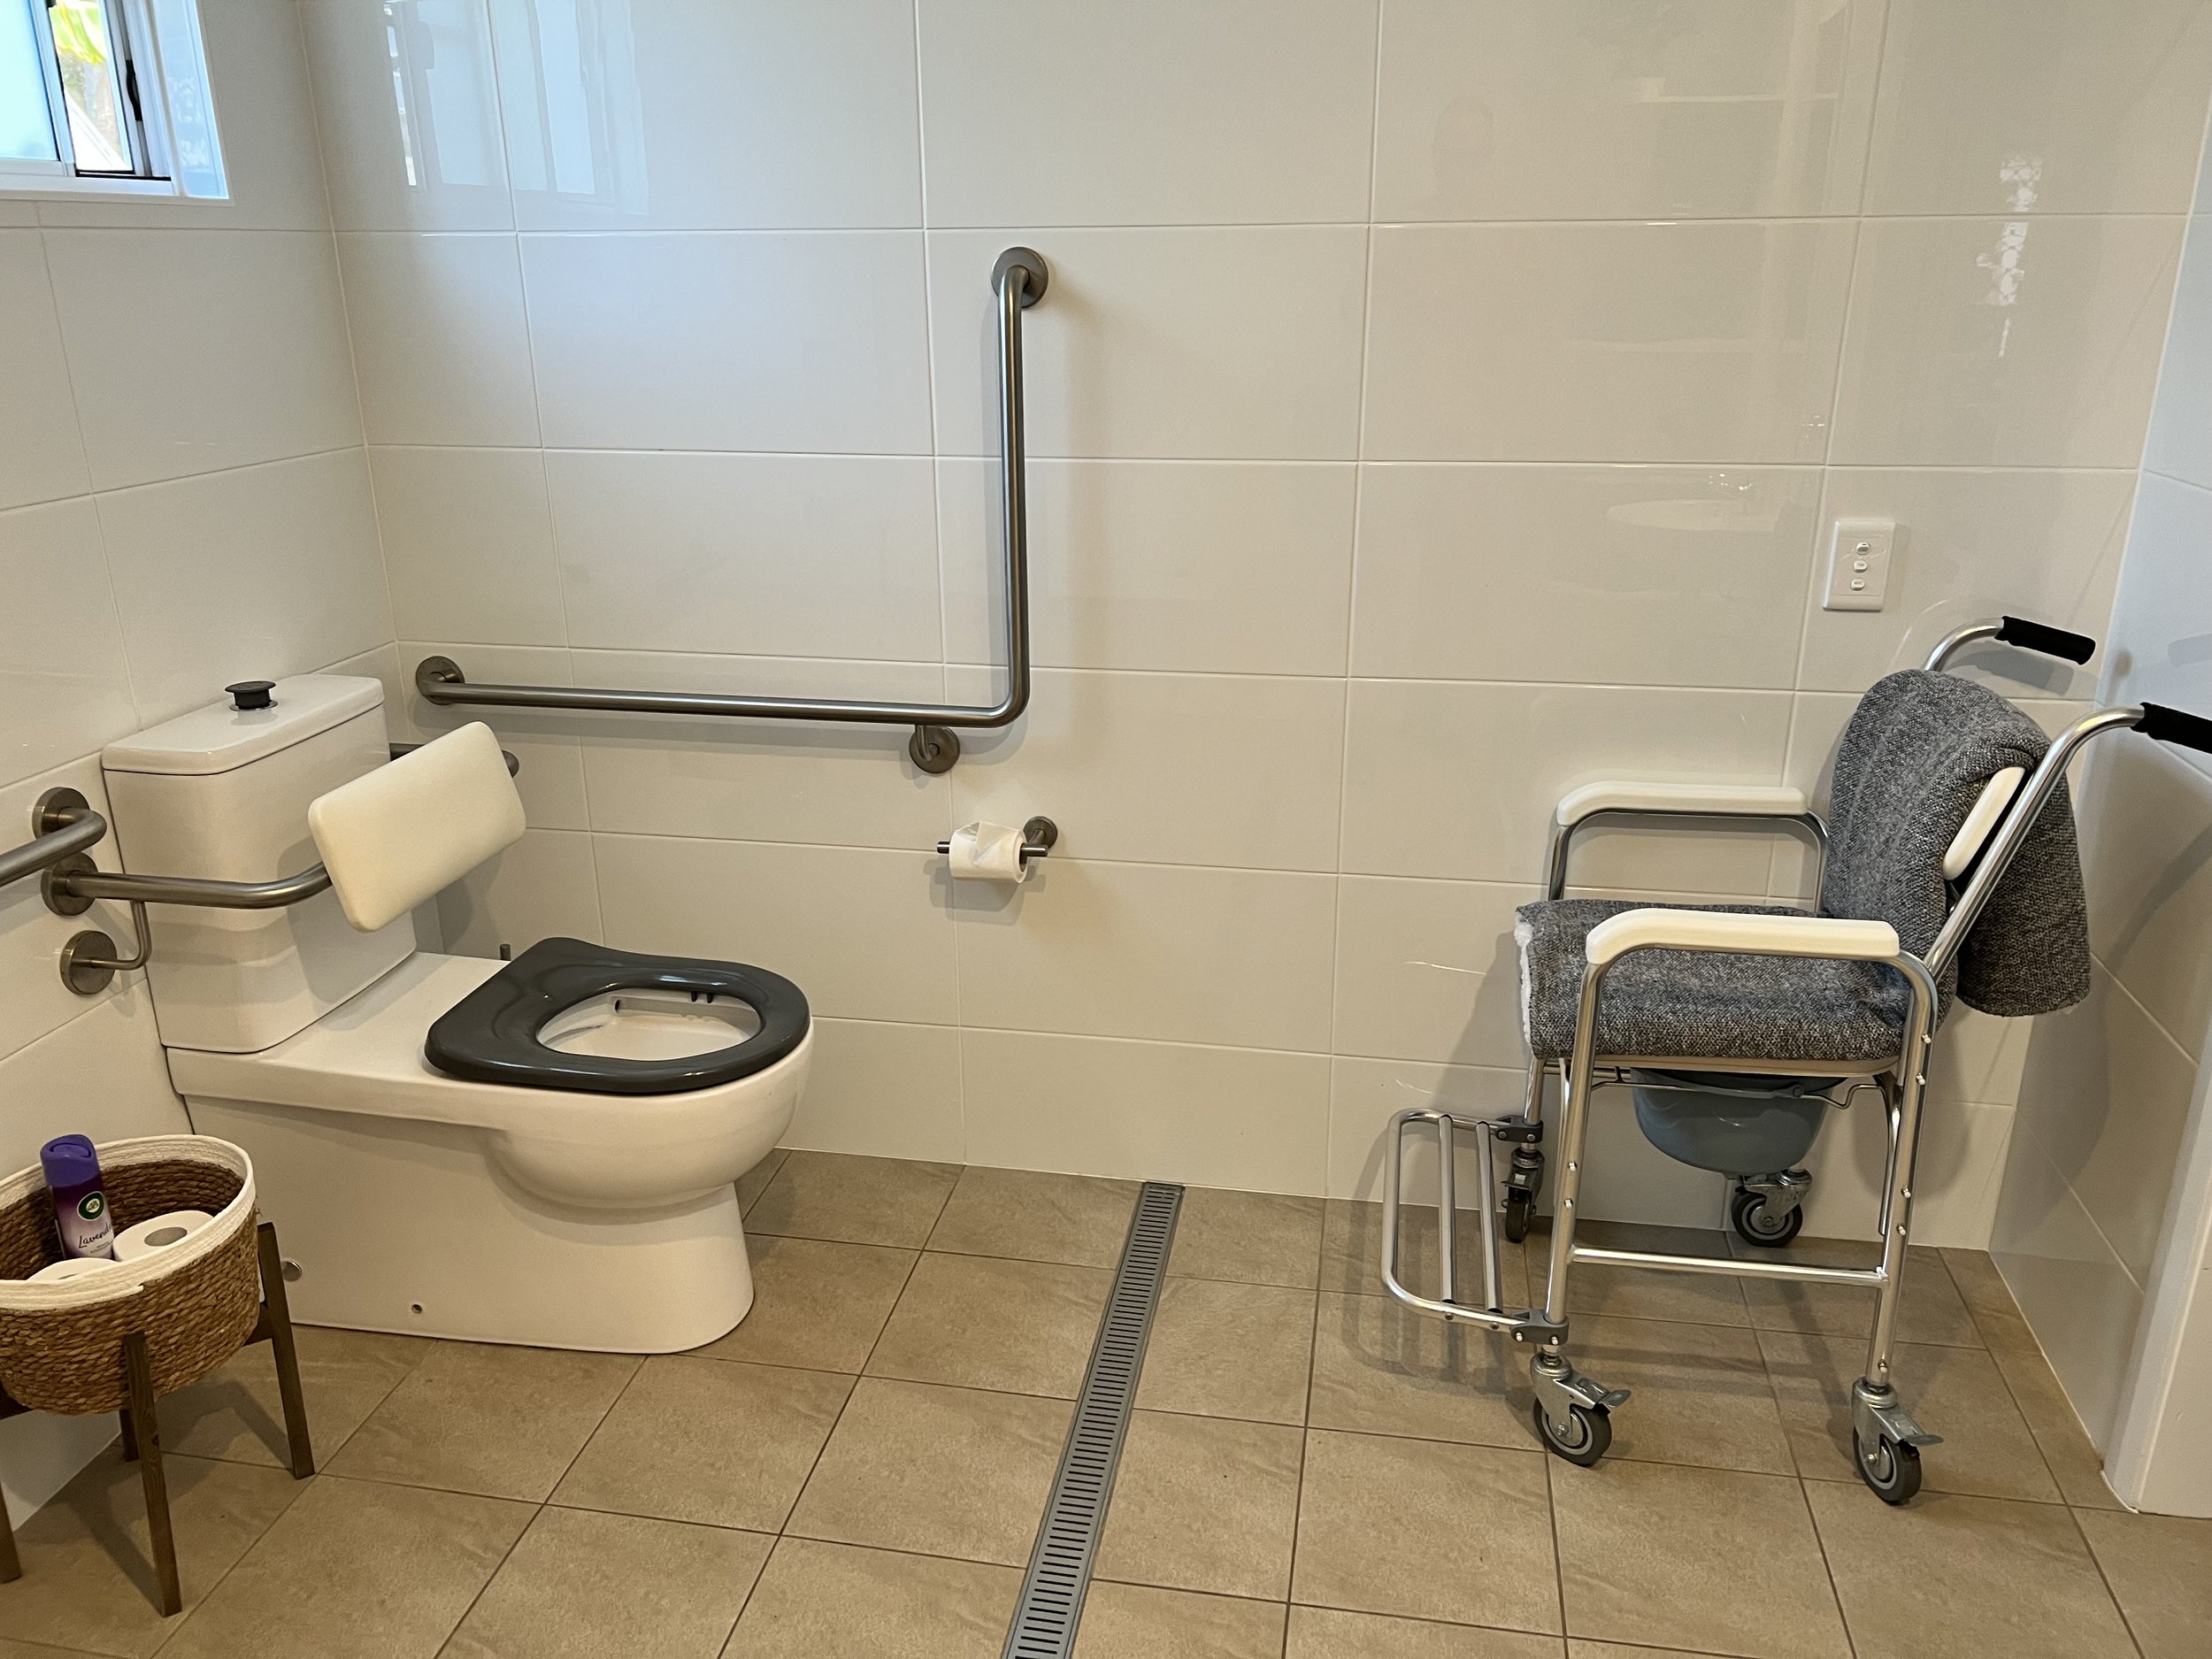 Spacious accessible bathroom